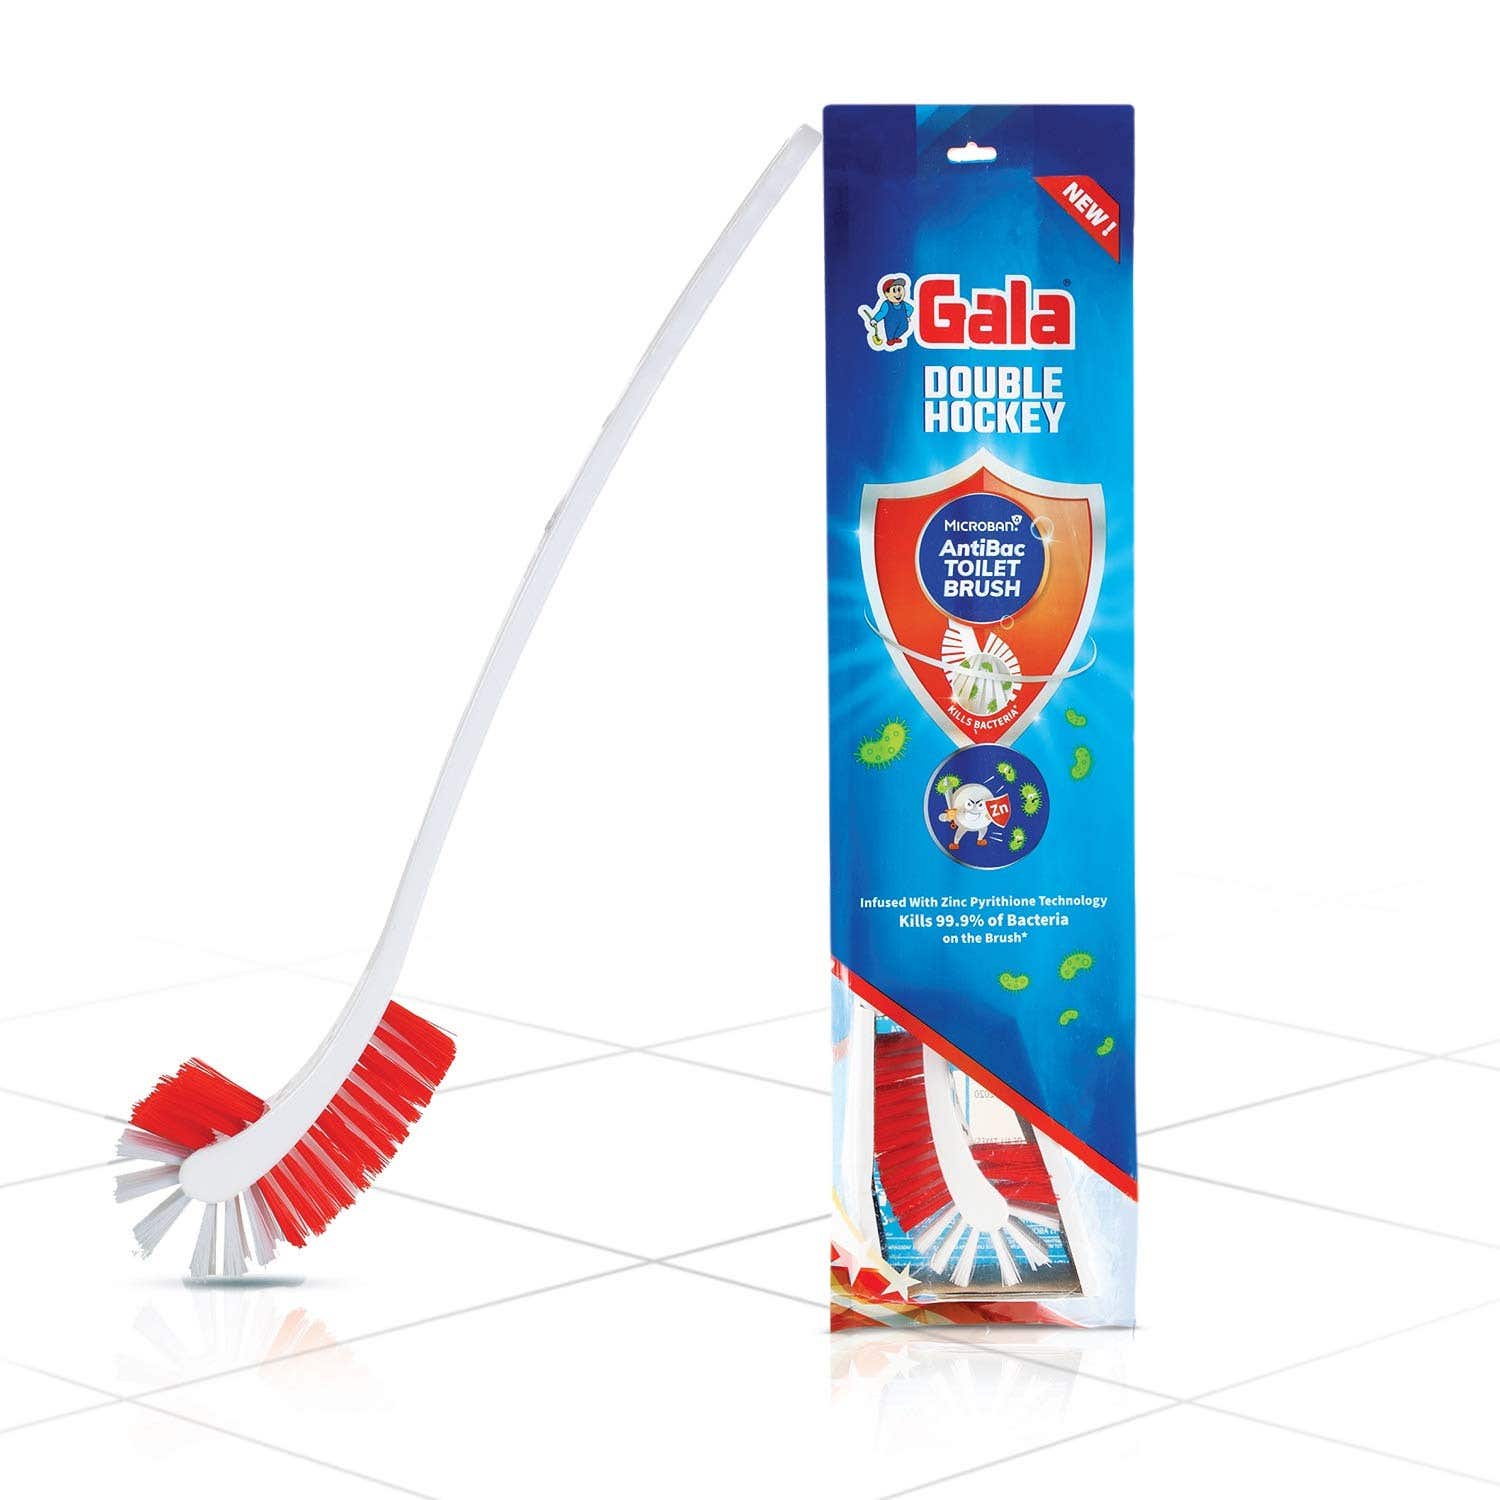 Gala Double Hockey Antibac Toilet Brush